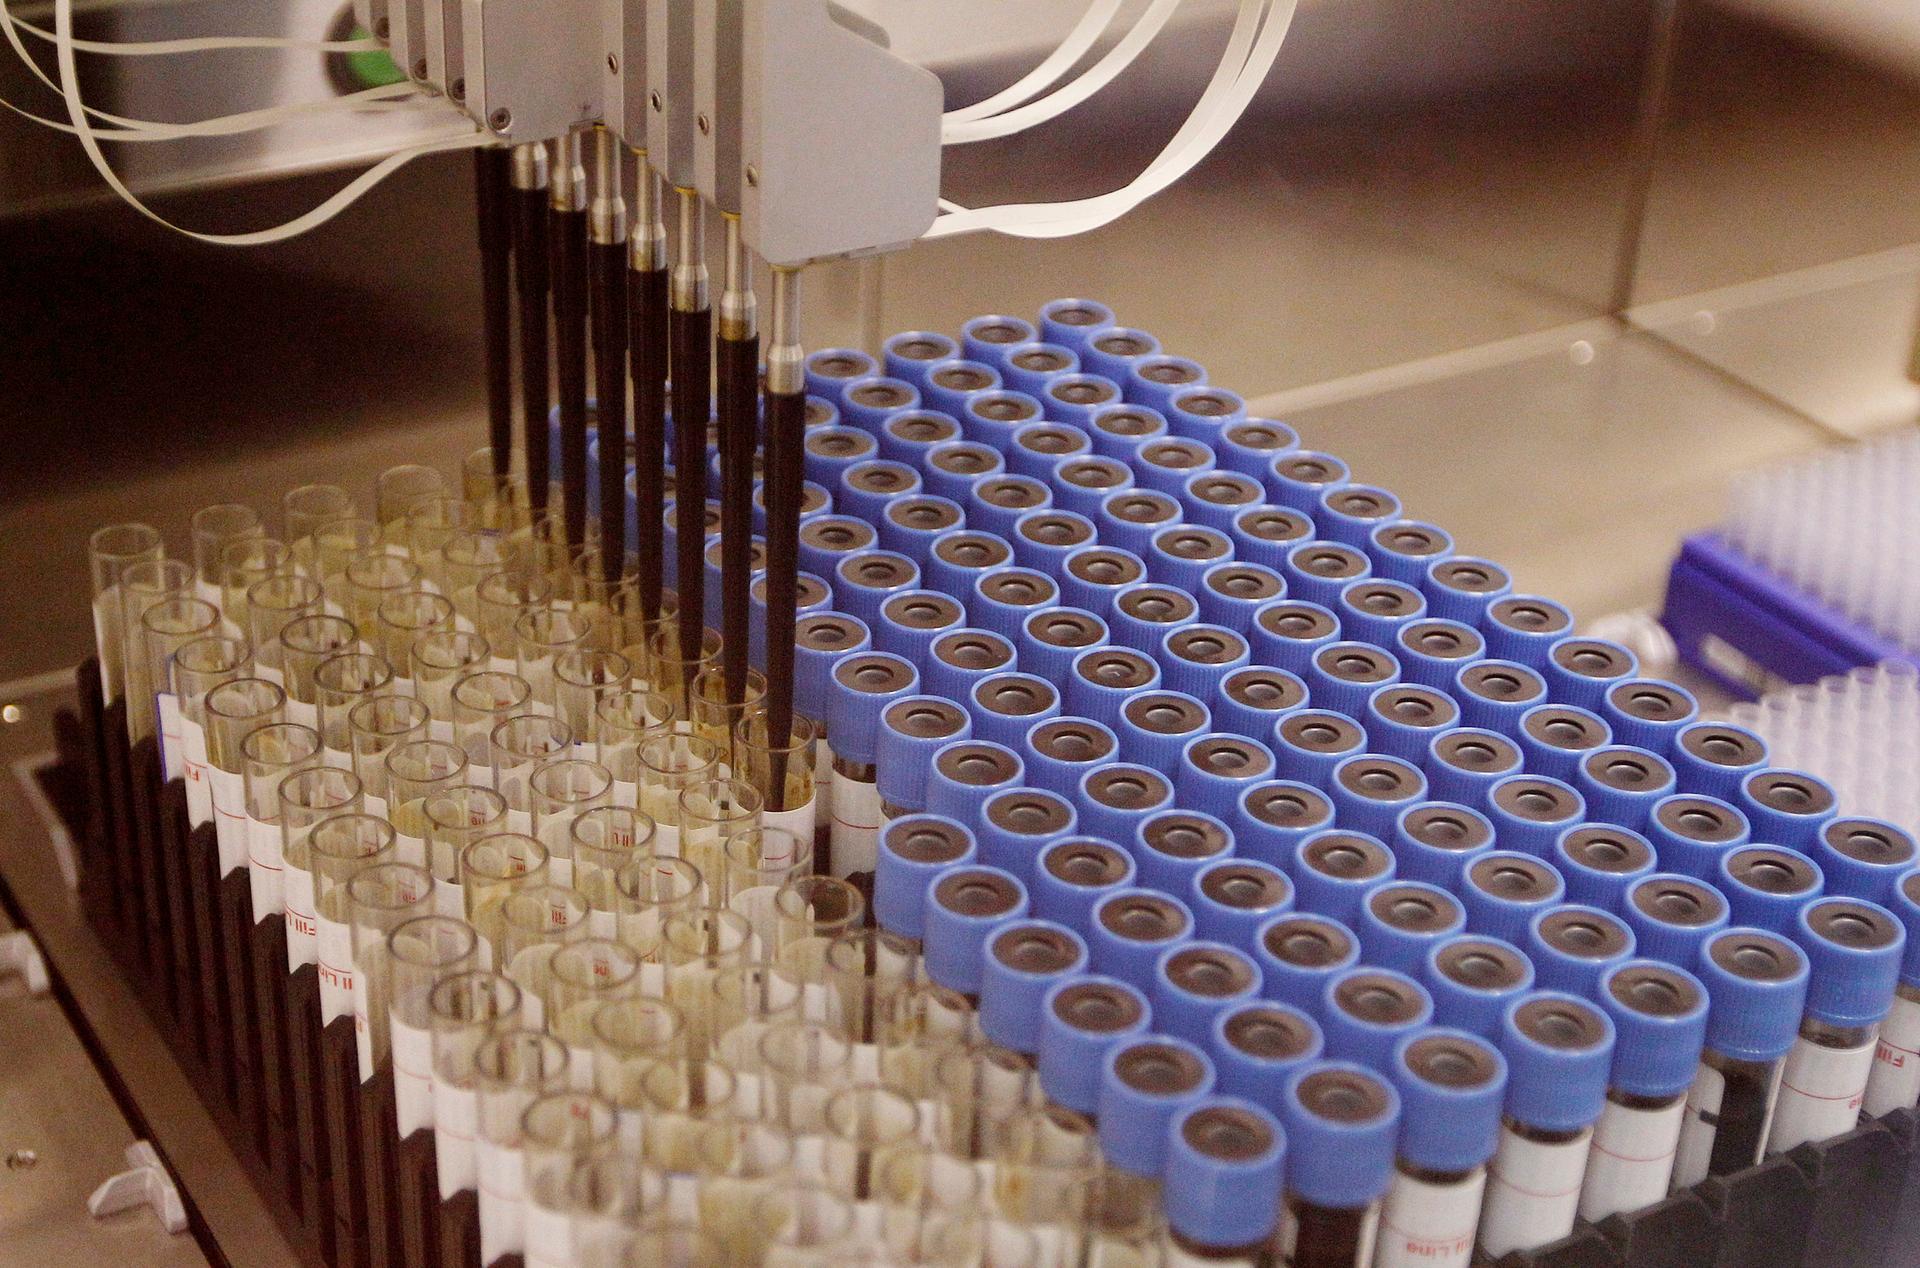 Blood samples are processed at Biobank